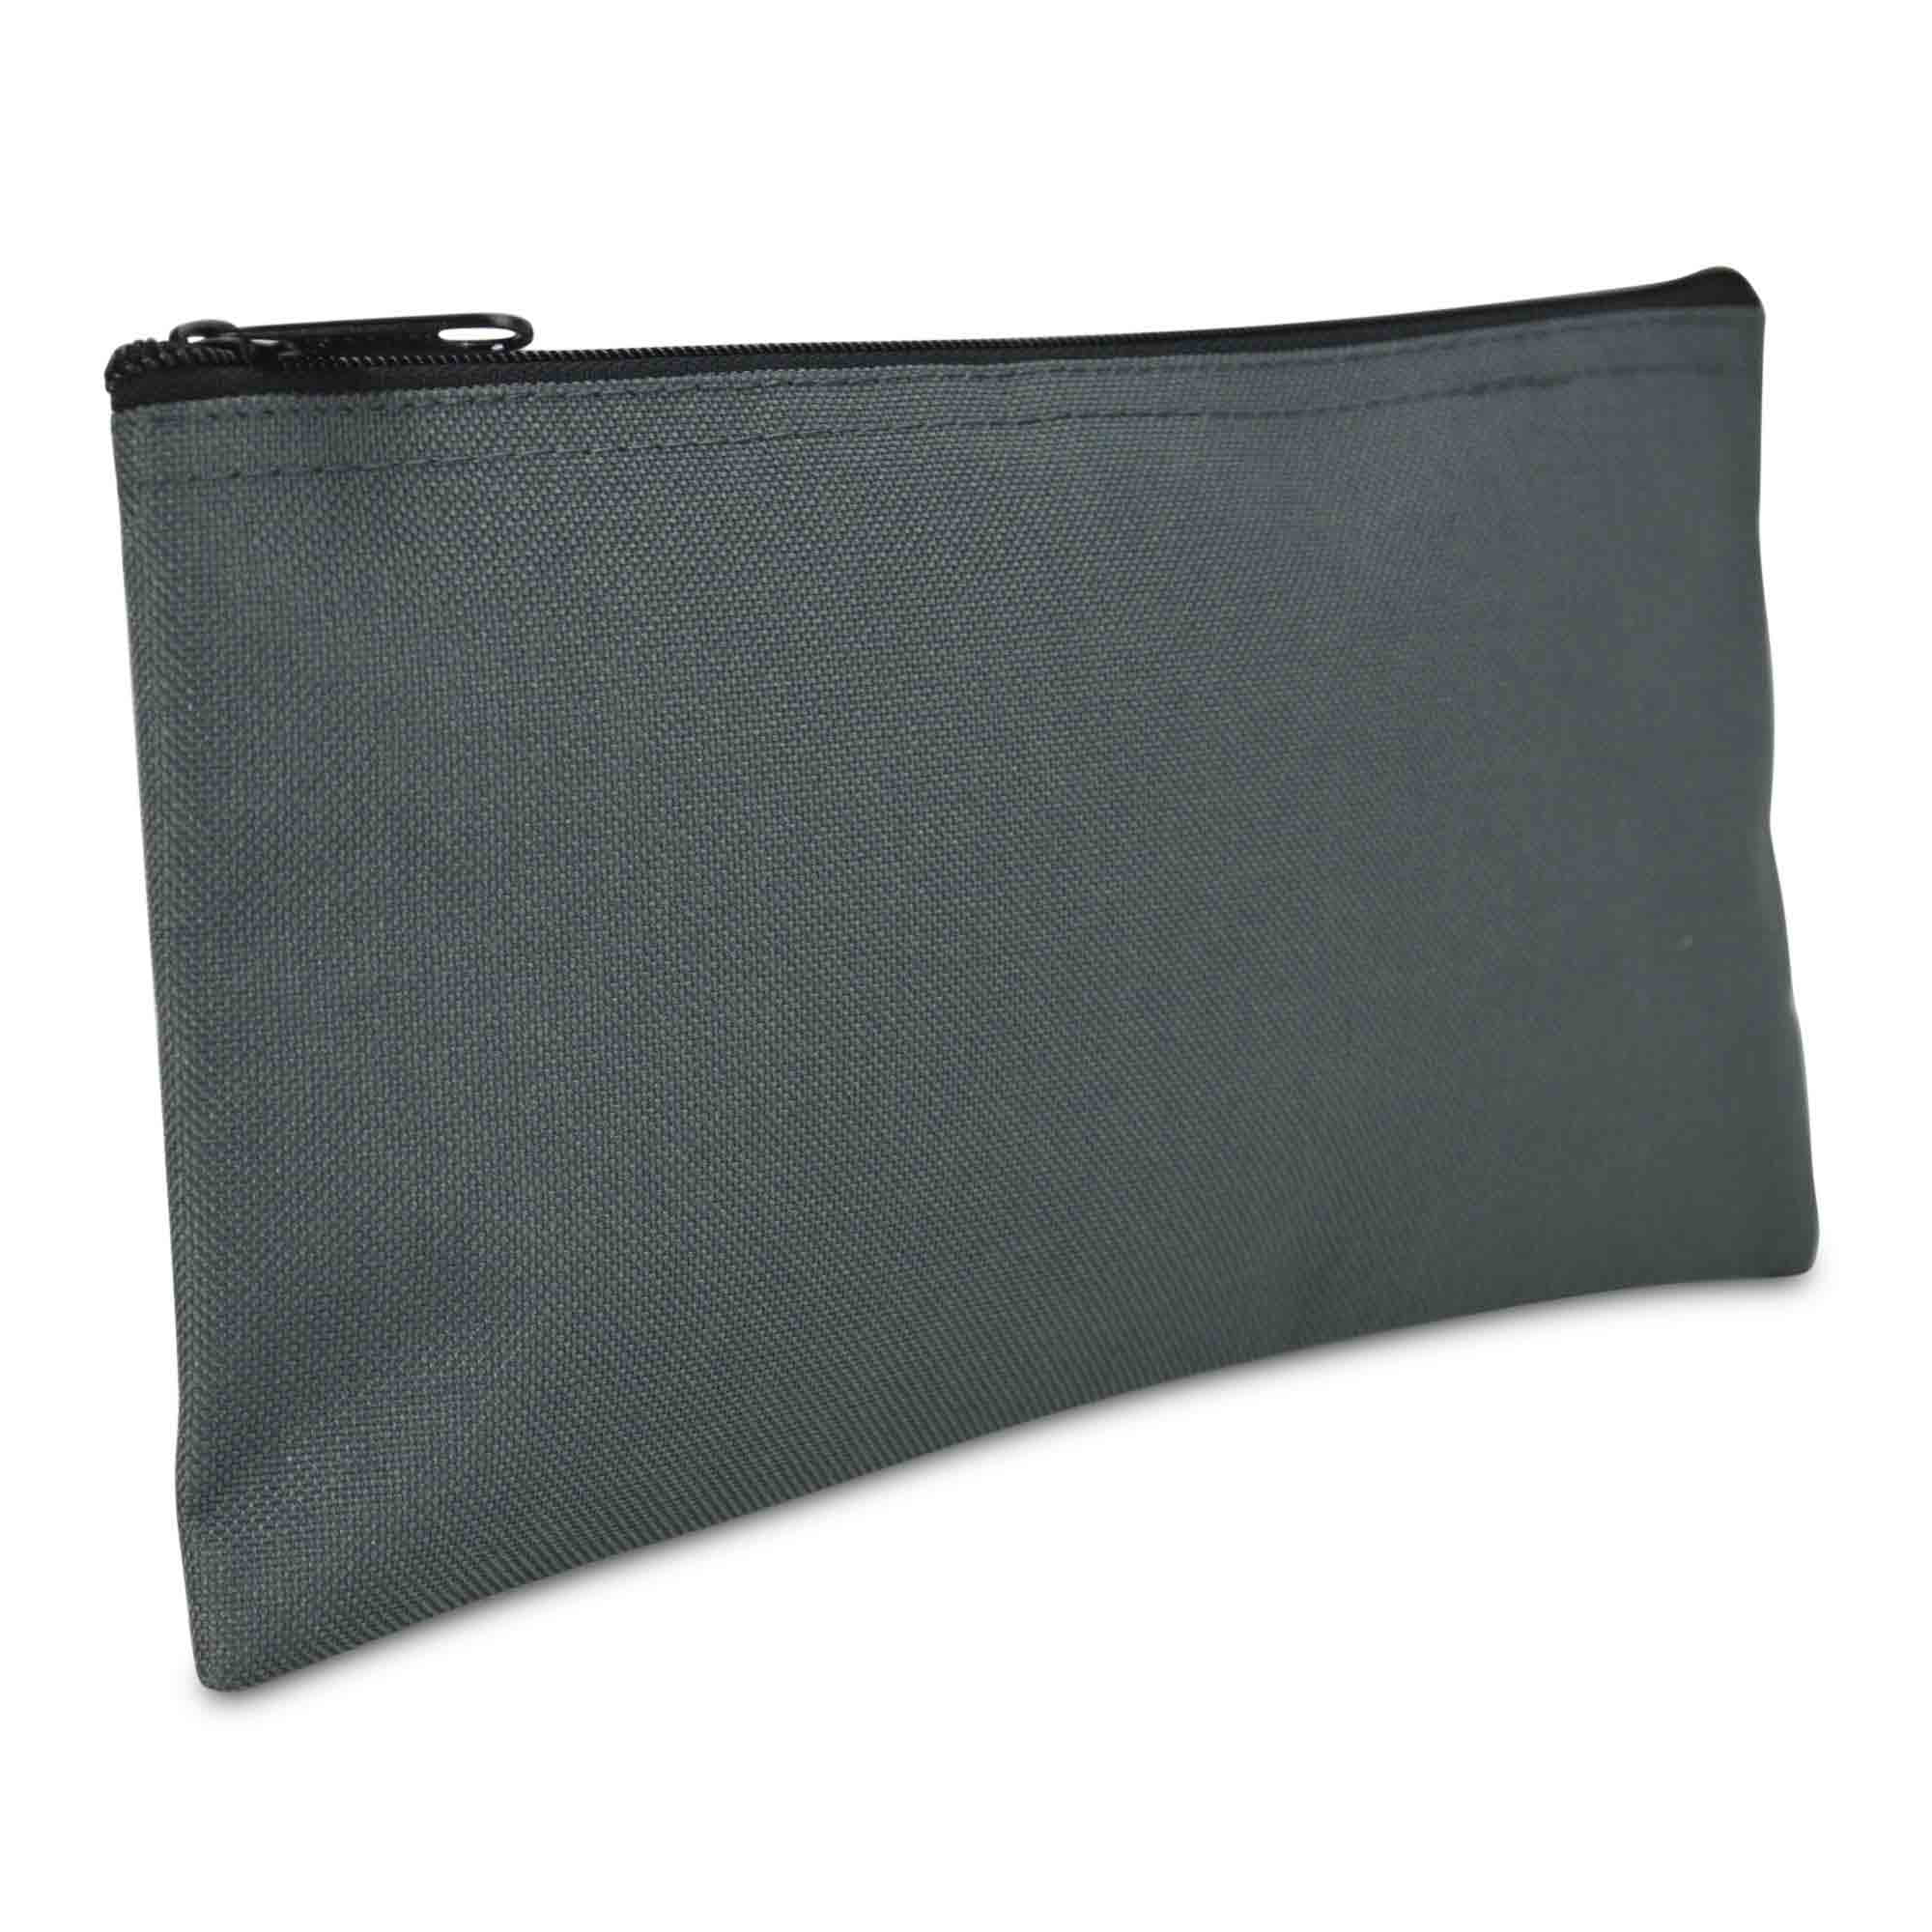 DALIX Bank Bags Money Pouch Security Deposit Utility Zipper Coin Bag in Gray - www.speedy25.com